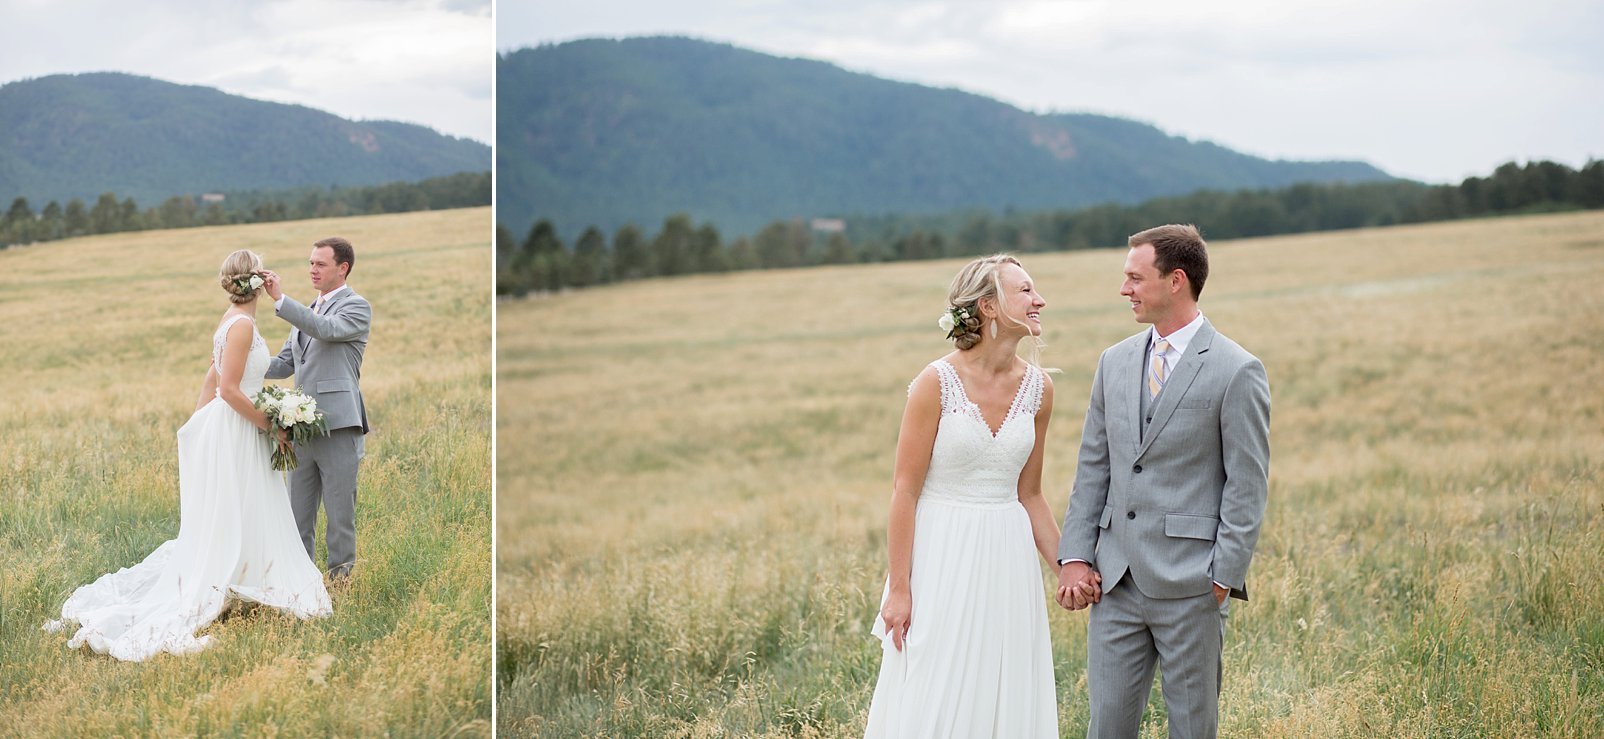 bride & groom photos at spruce mountain ranch